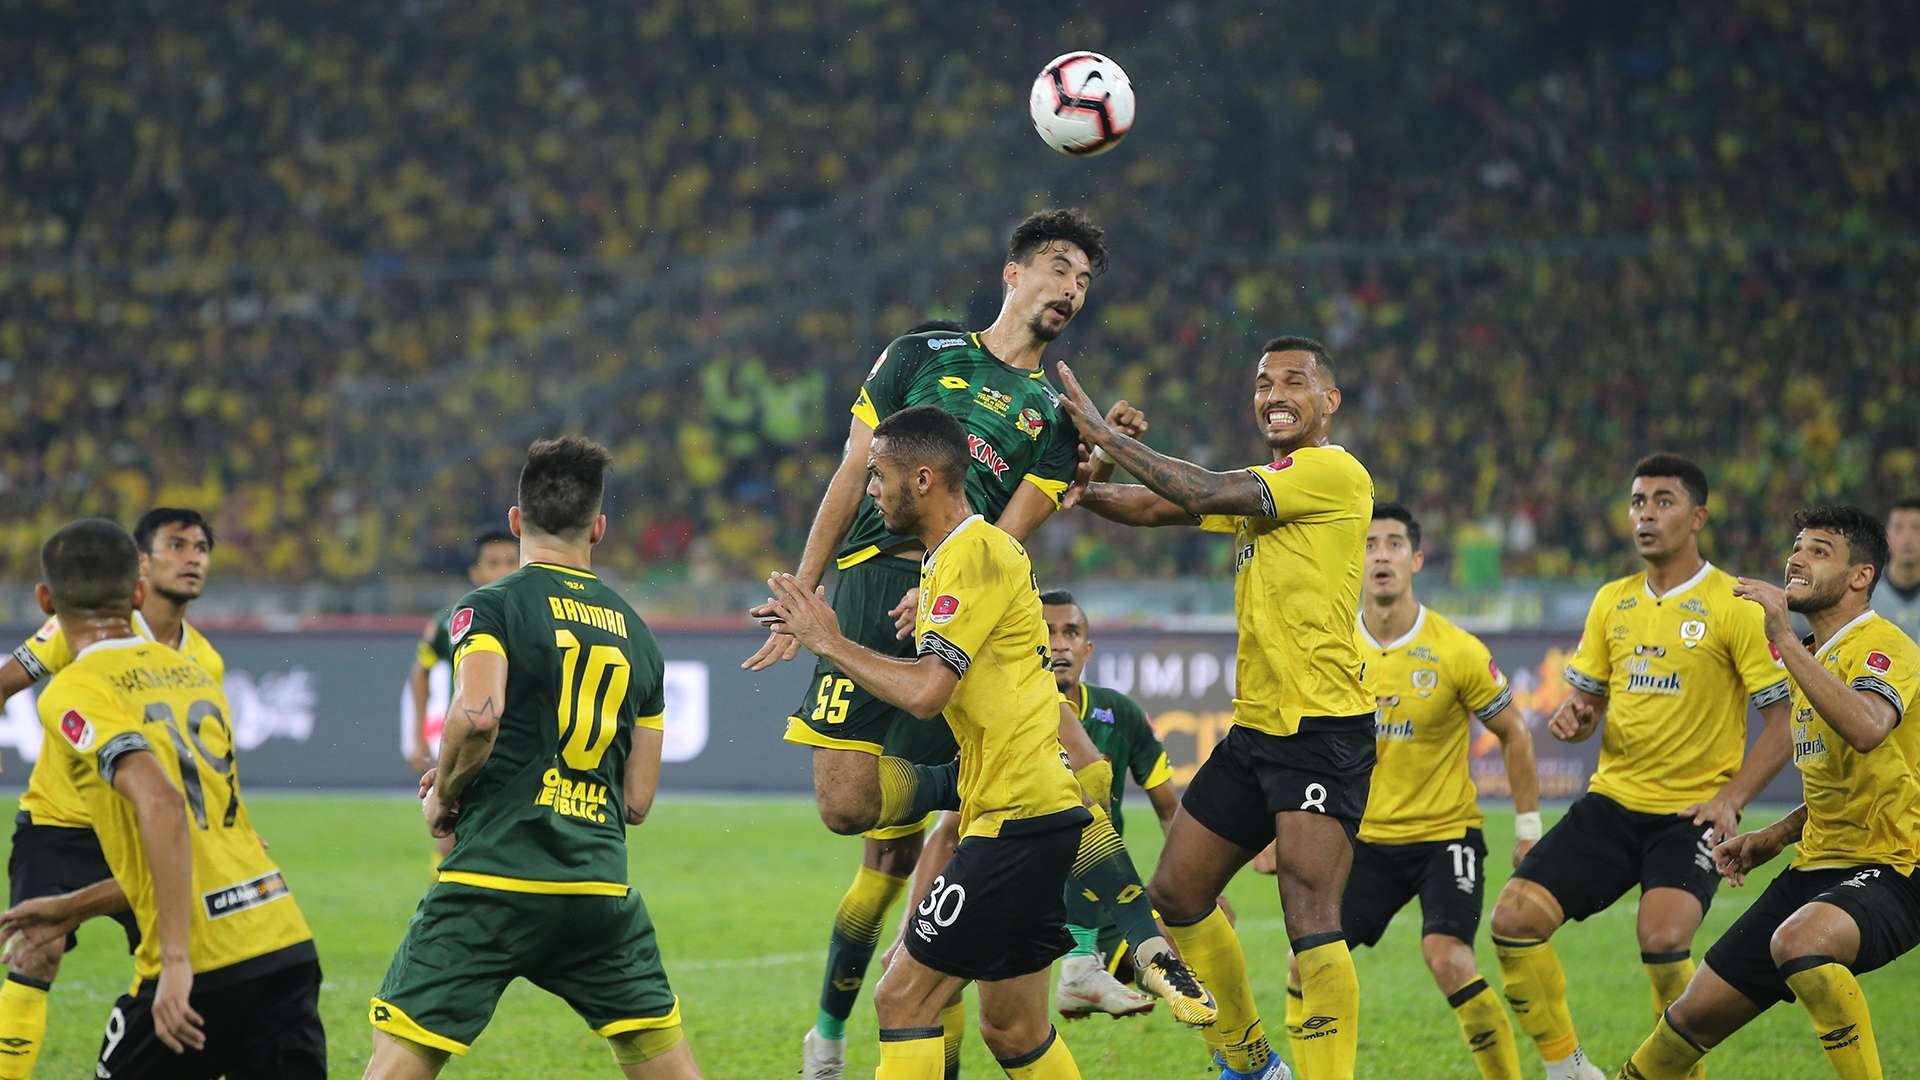 David Rowley, Leandro dos Santos, Perak v Kedah, Malaysia FA Cup, 27 Jul 2019